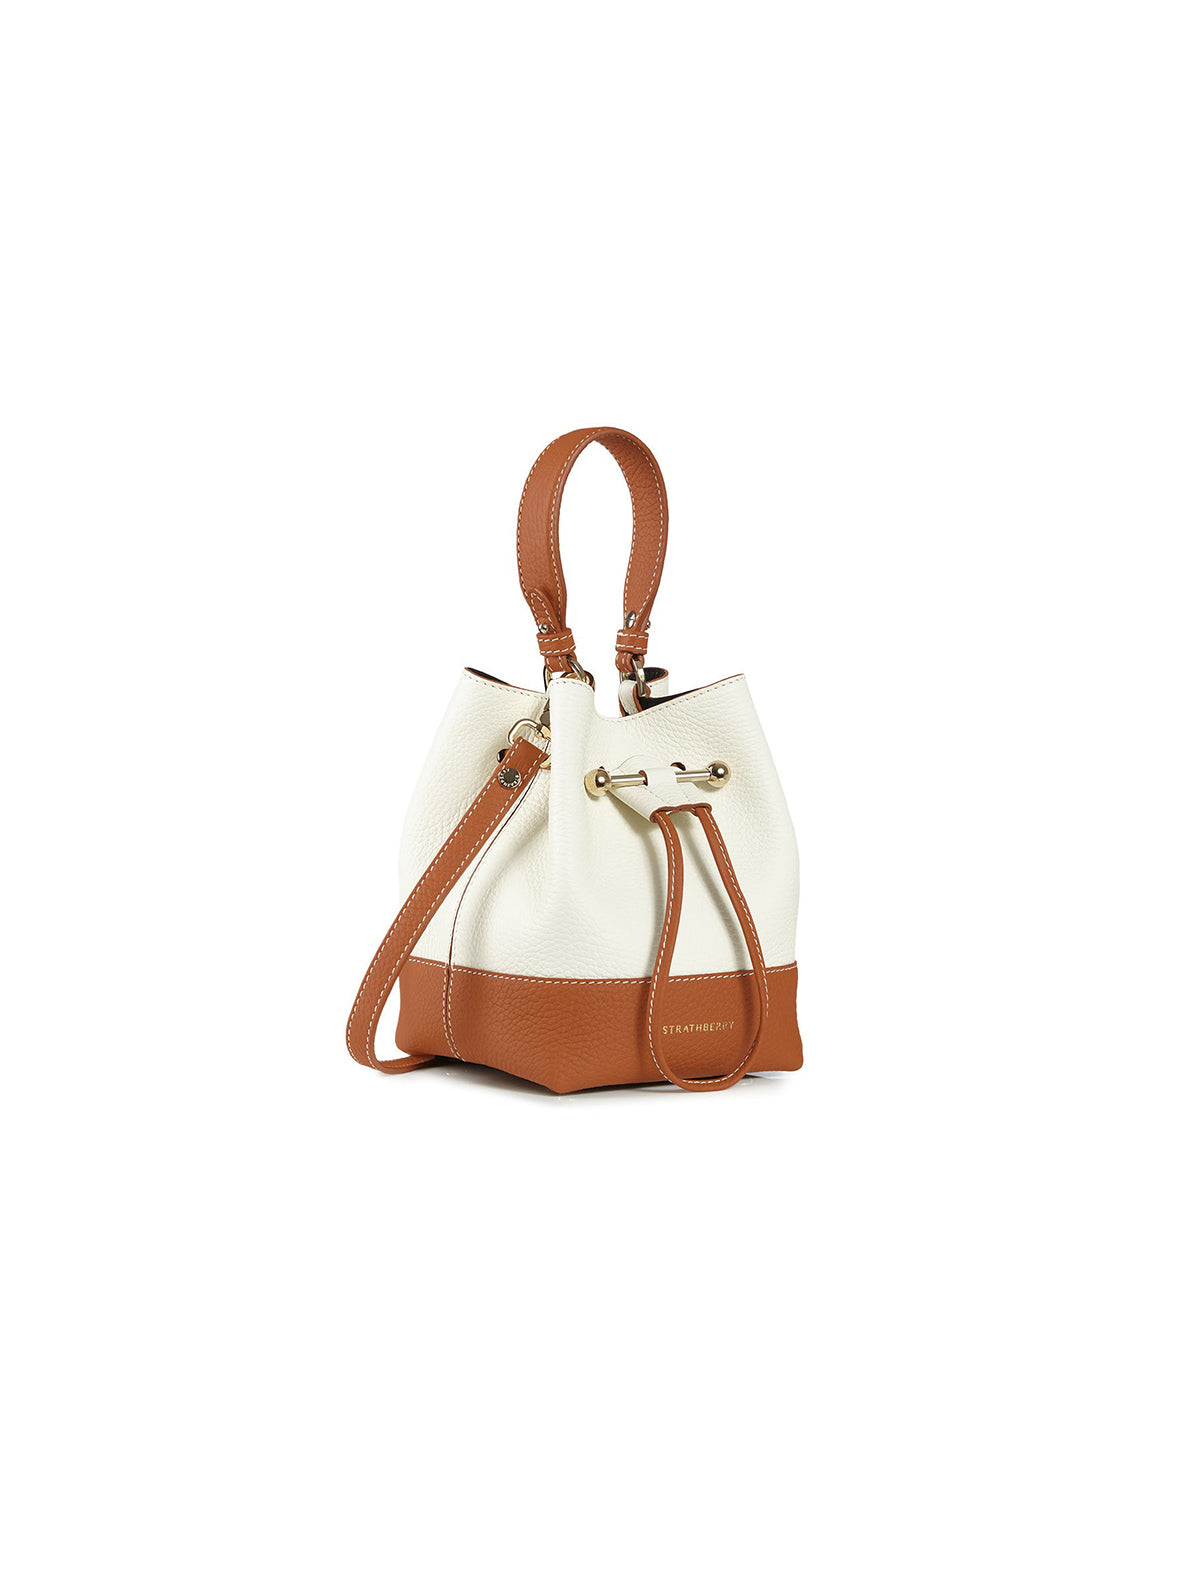 Strathberry - Lana Osette - Leather Mini Bucket Bag - Natural / Burgundy